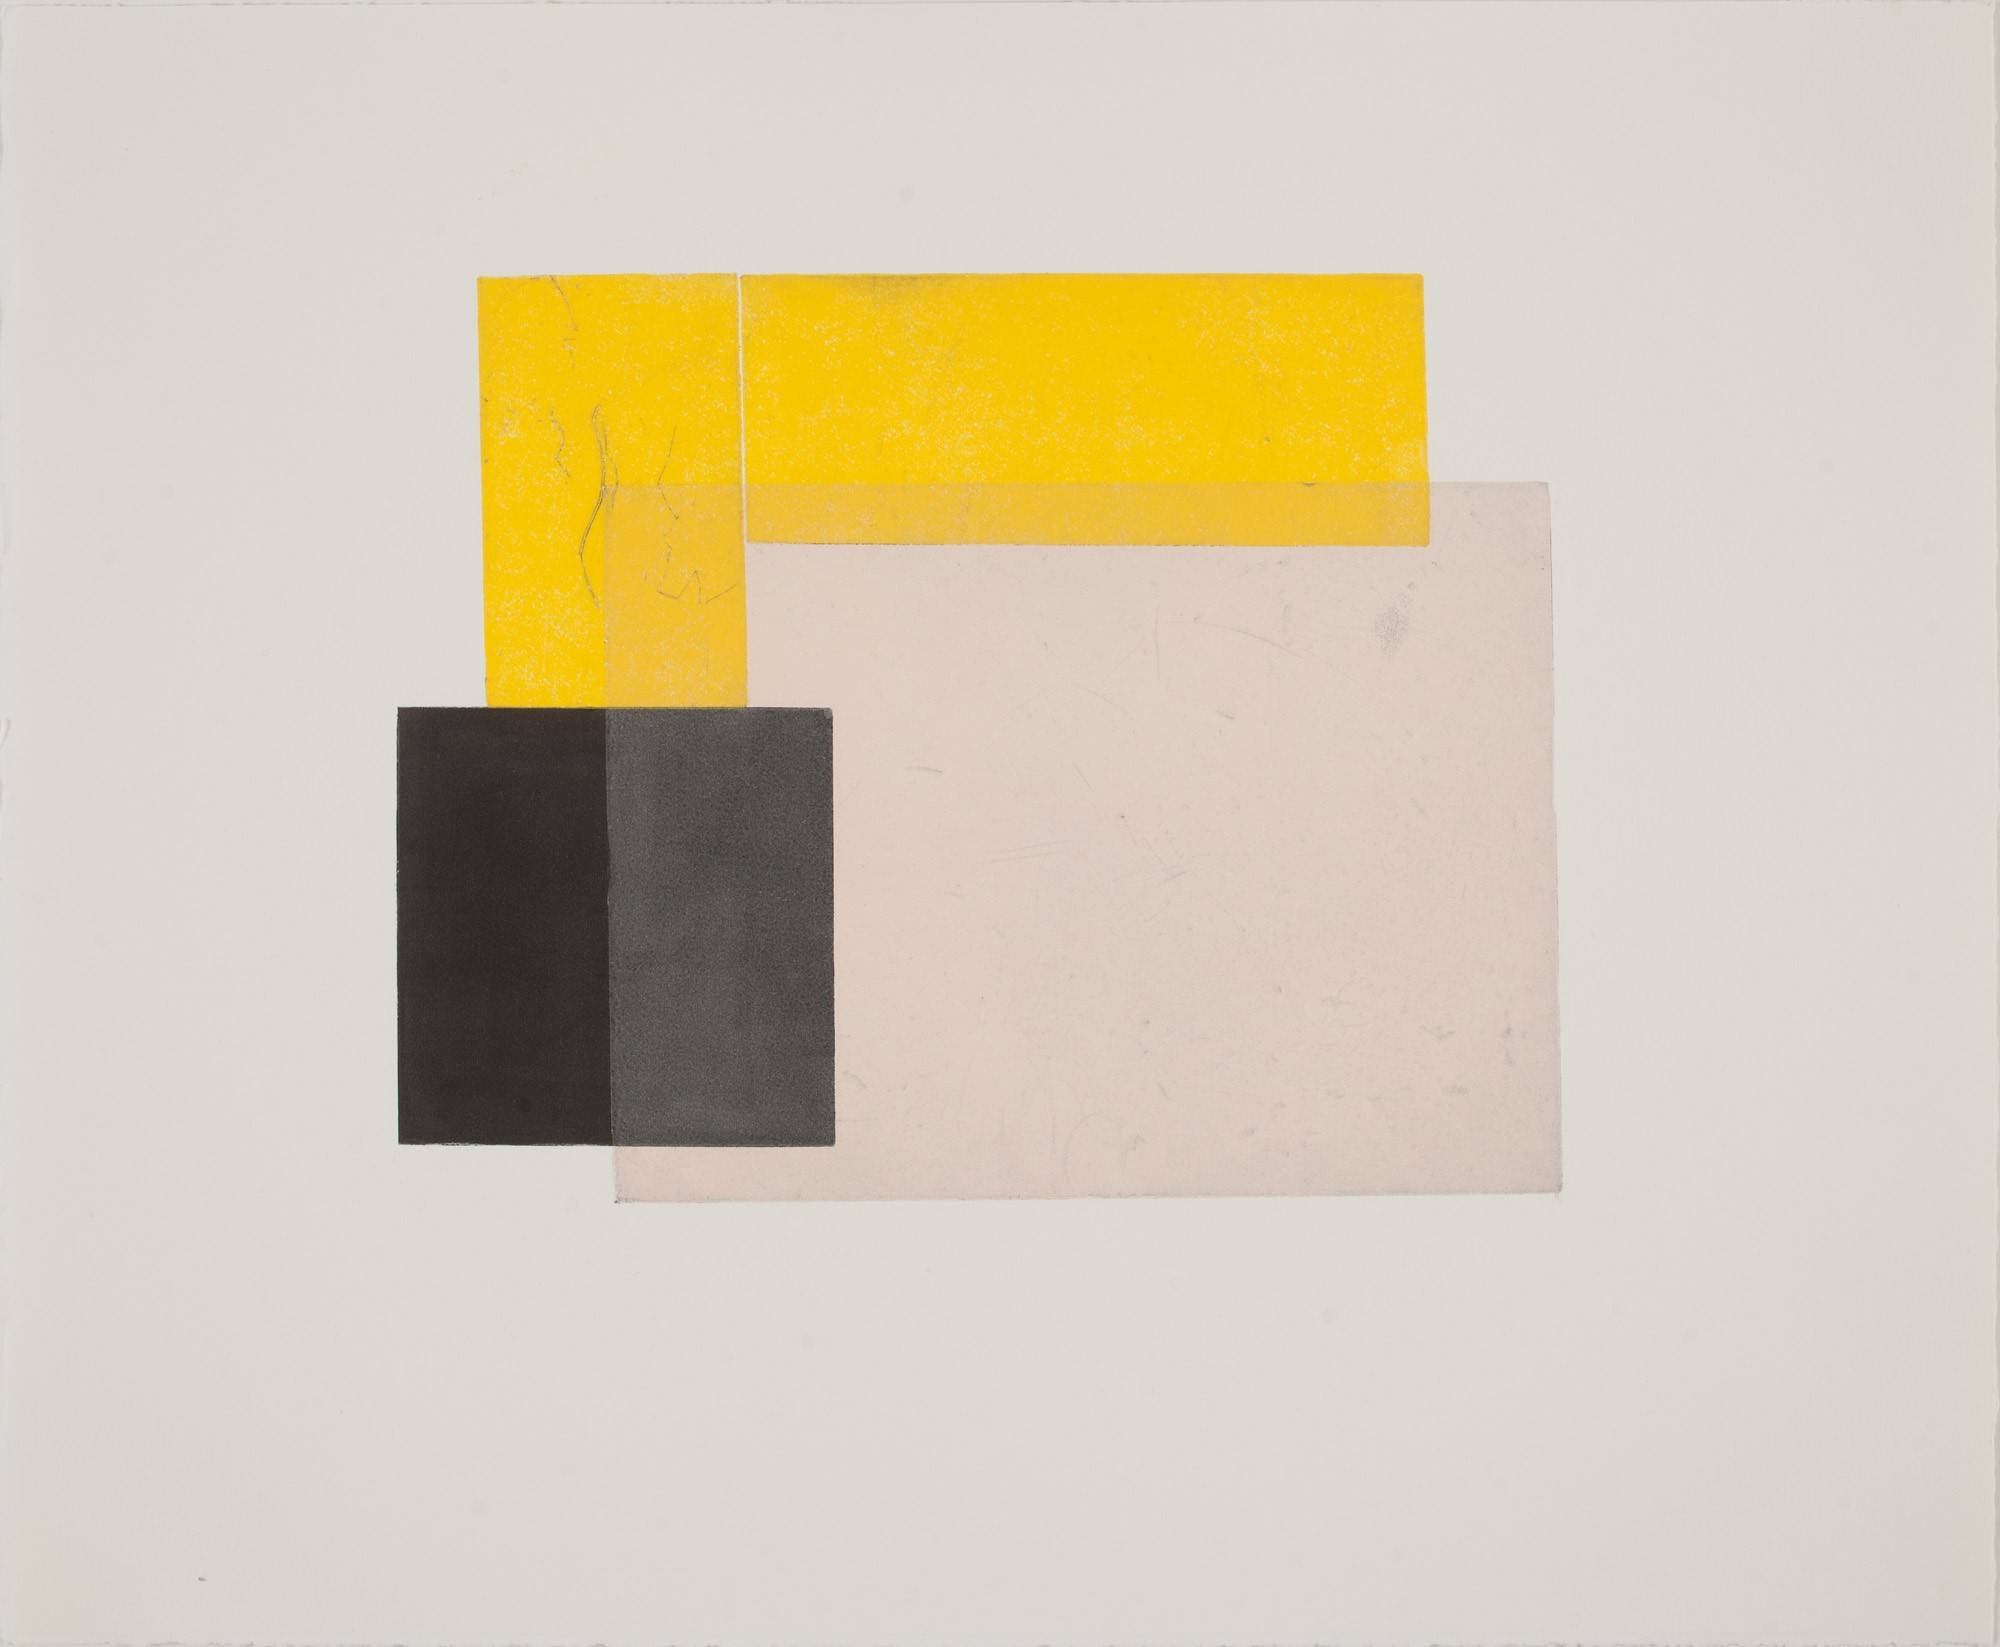 Colour and Square 1 (2020) — Siw Lurås